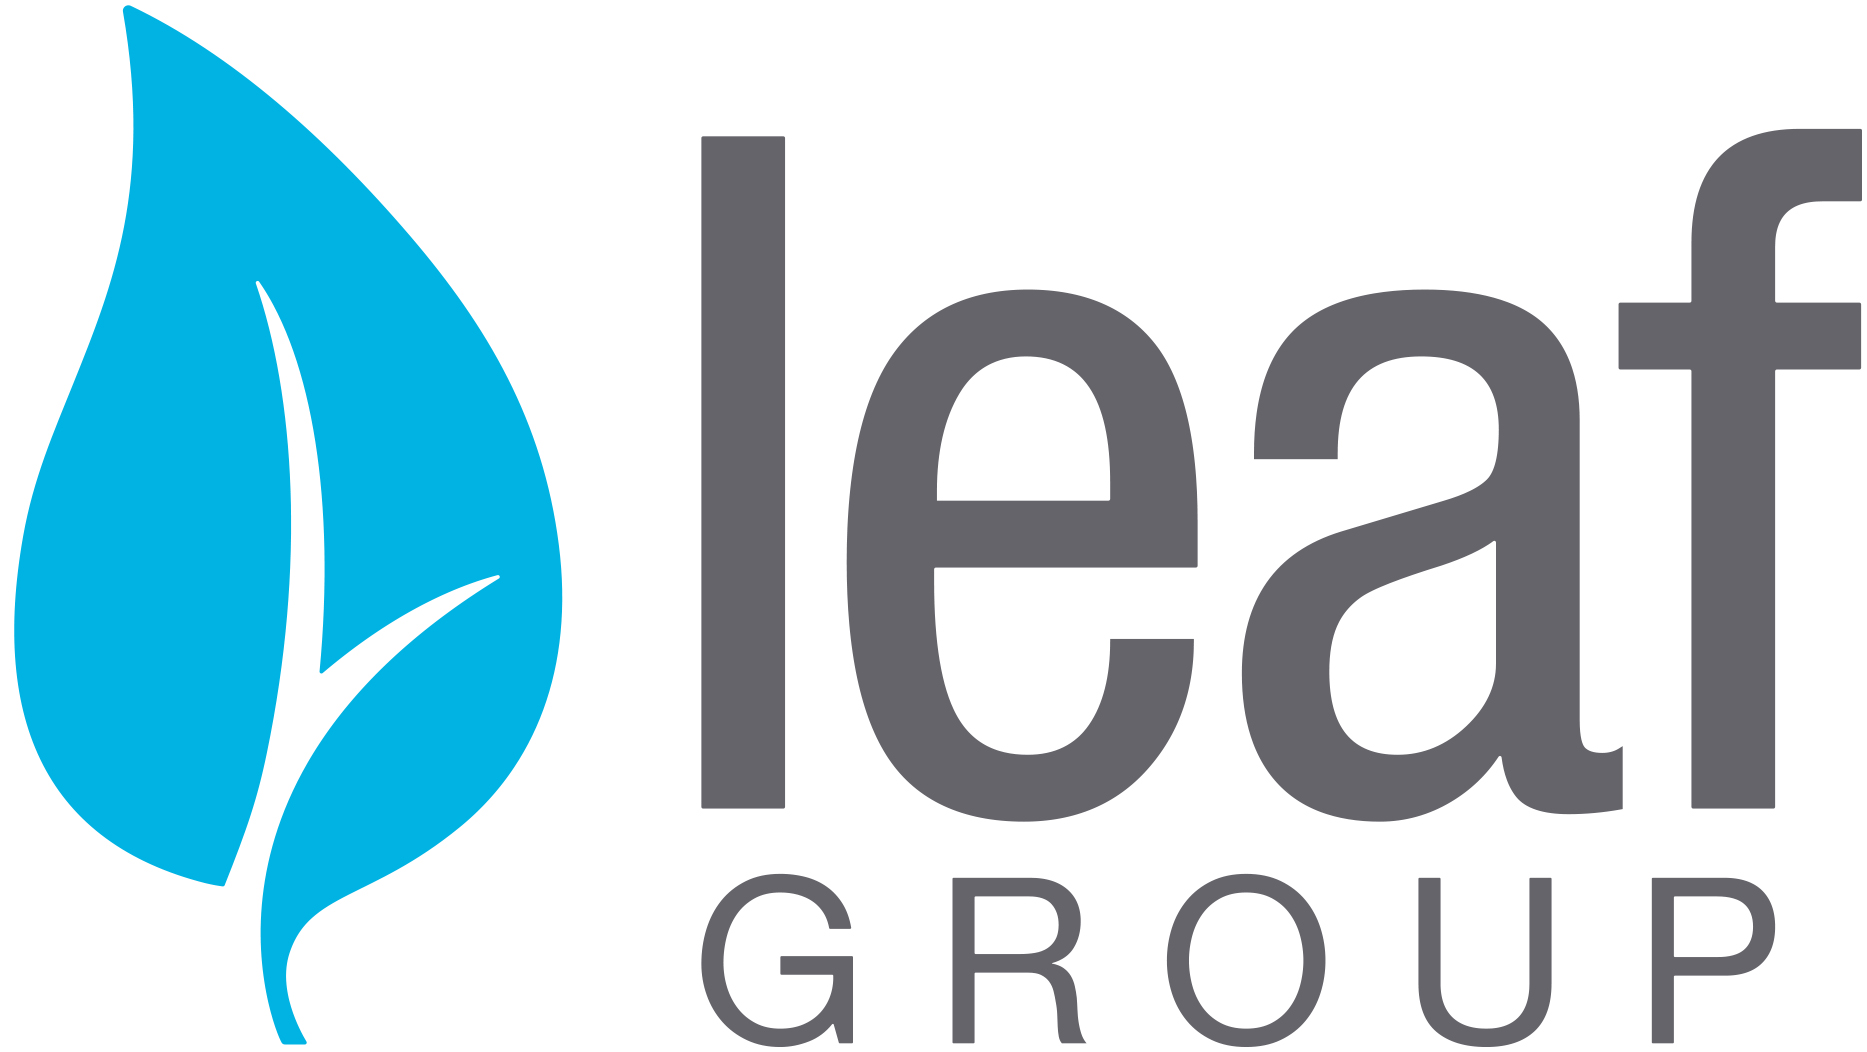 Leaf Group Ltd Logo